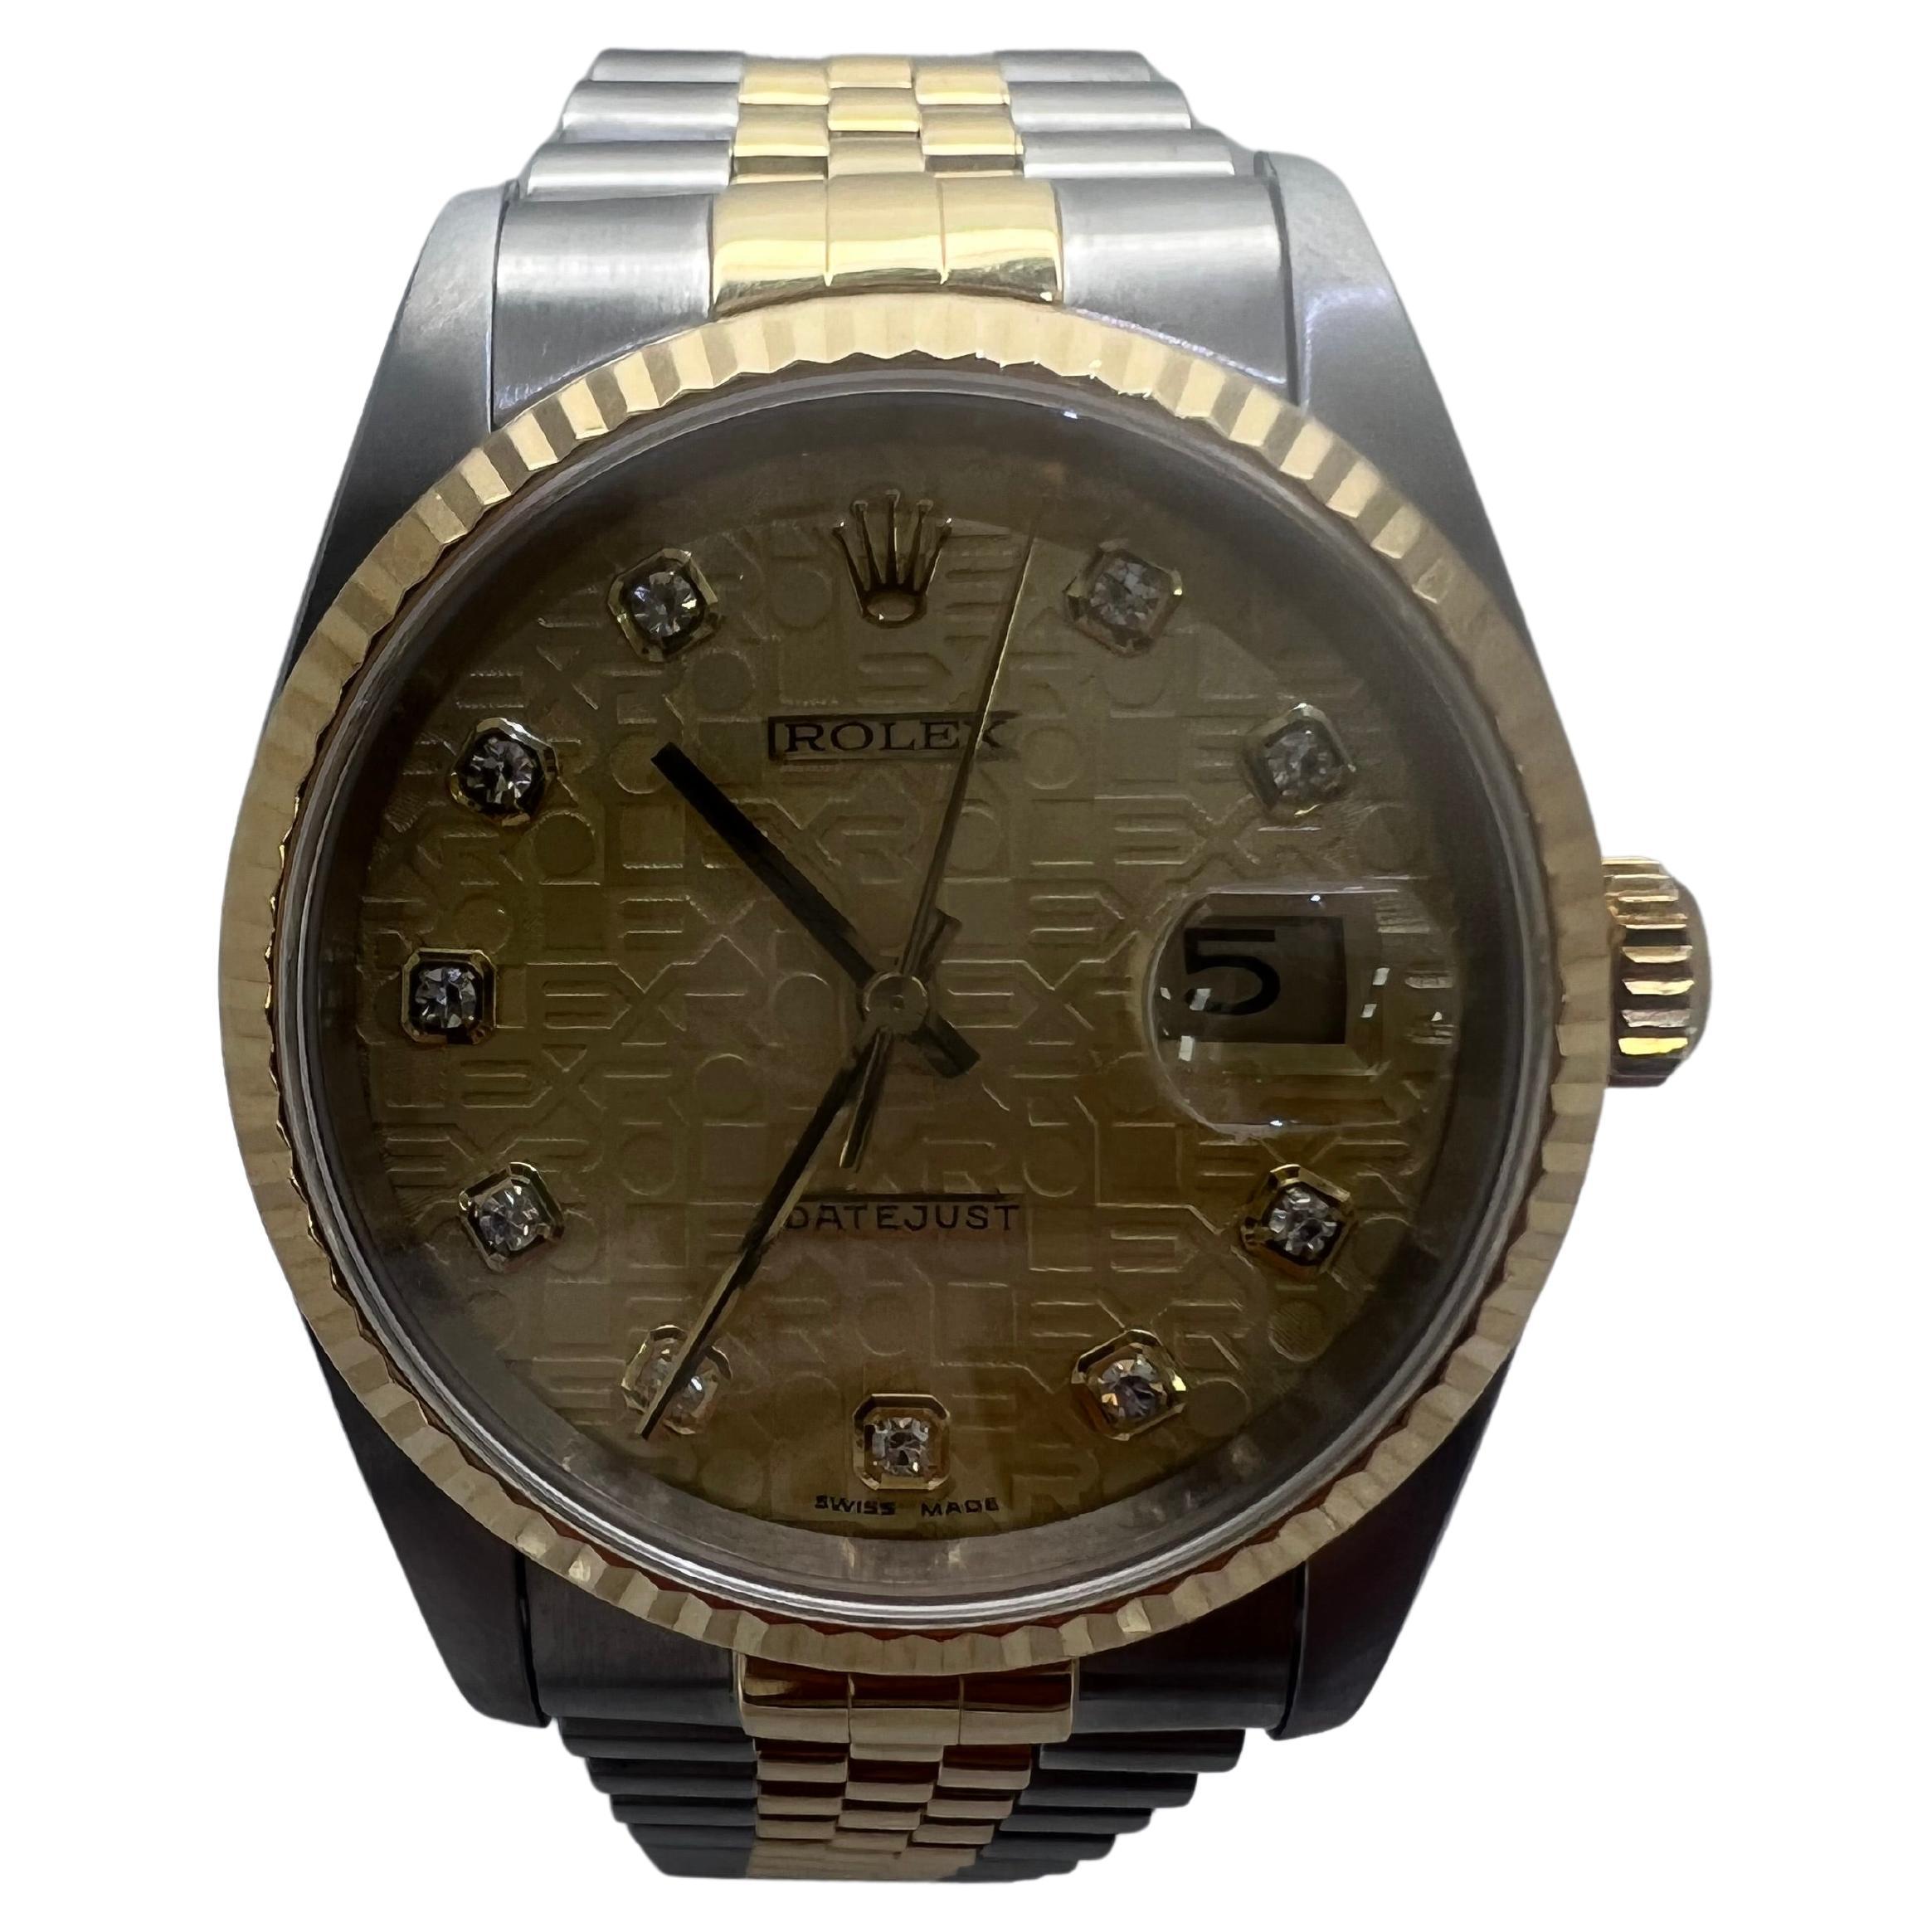 What is the best men's wristwatch?